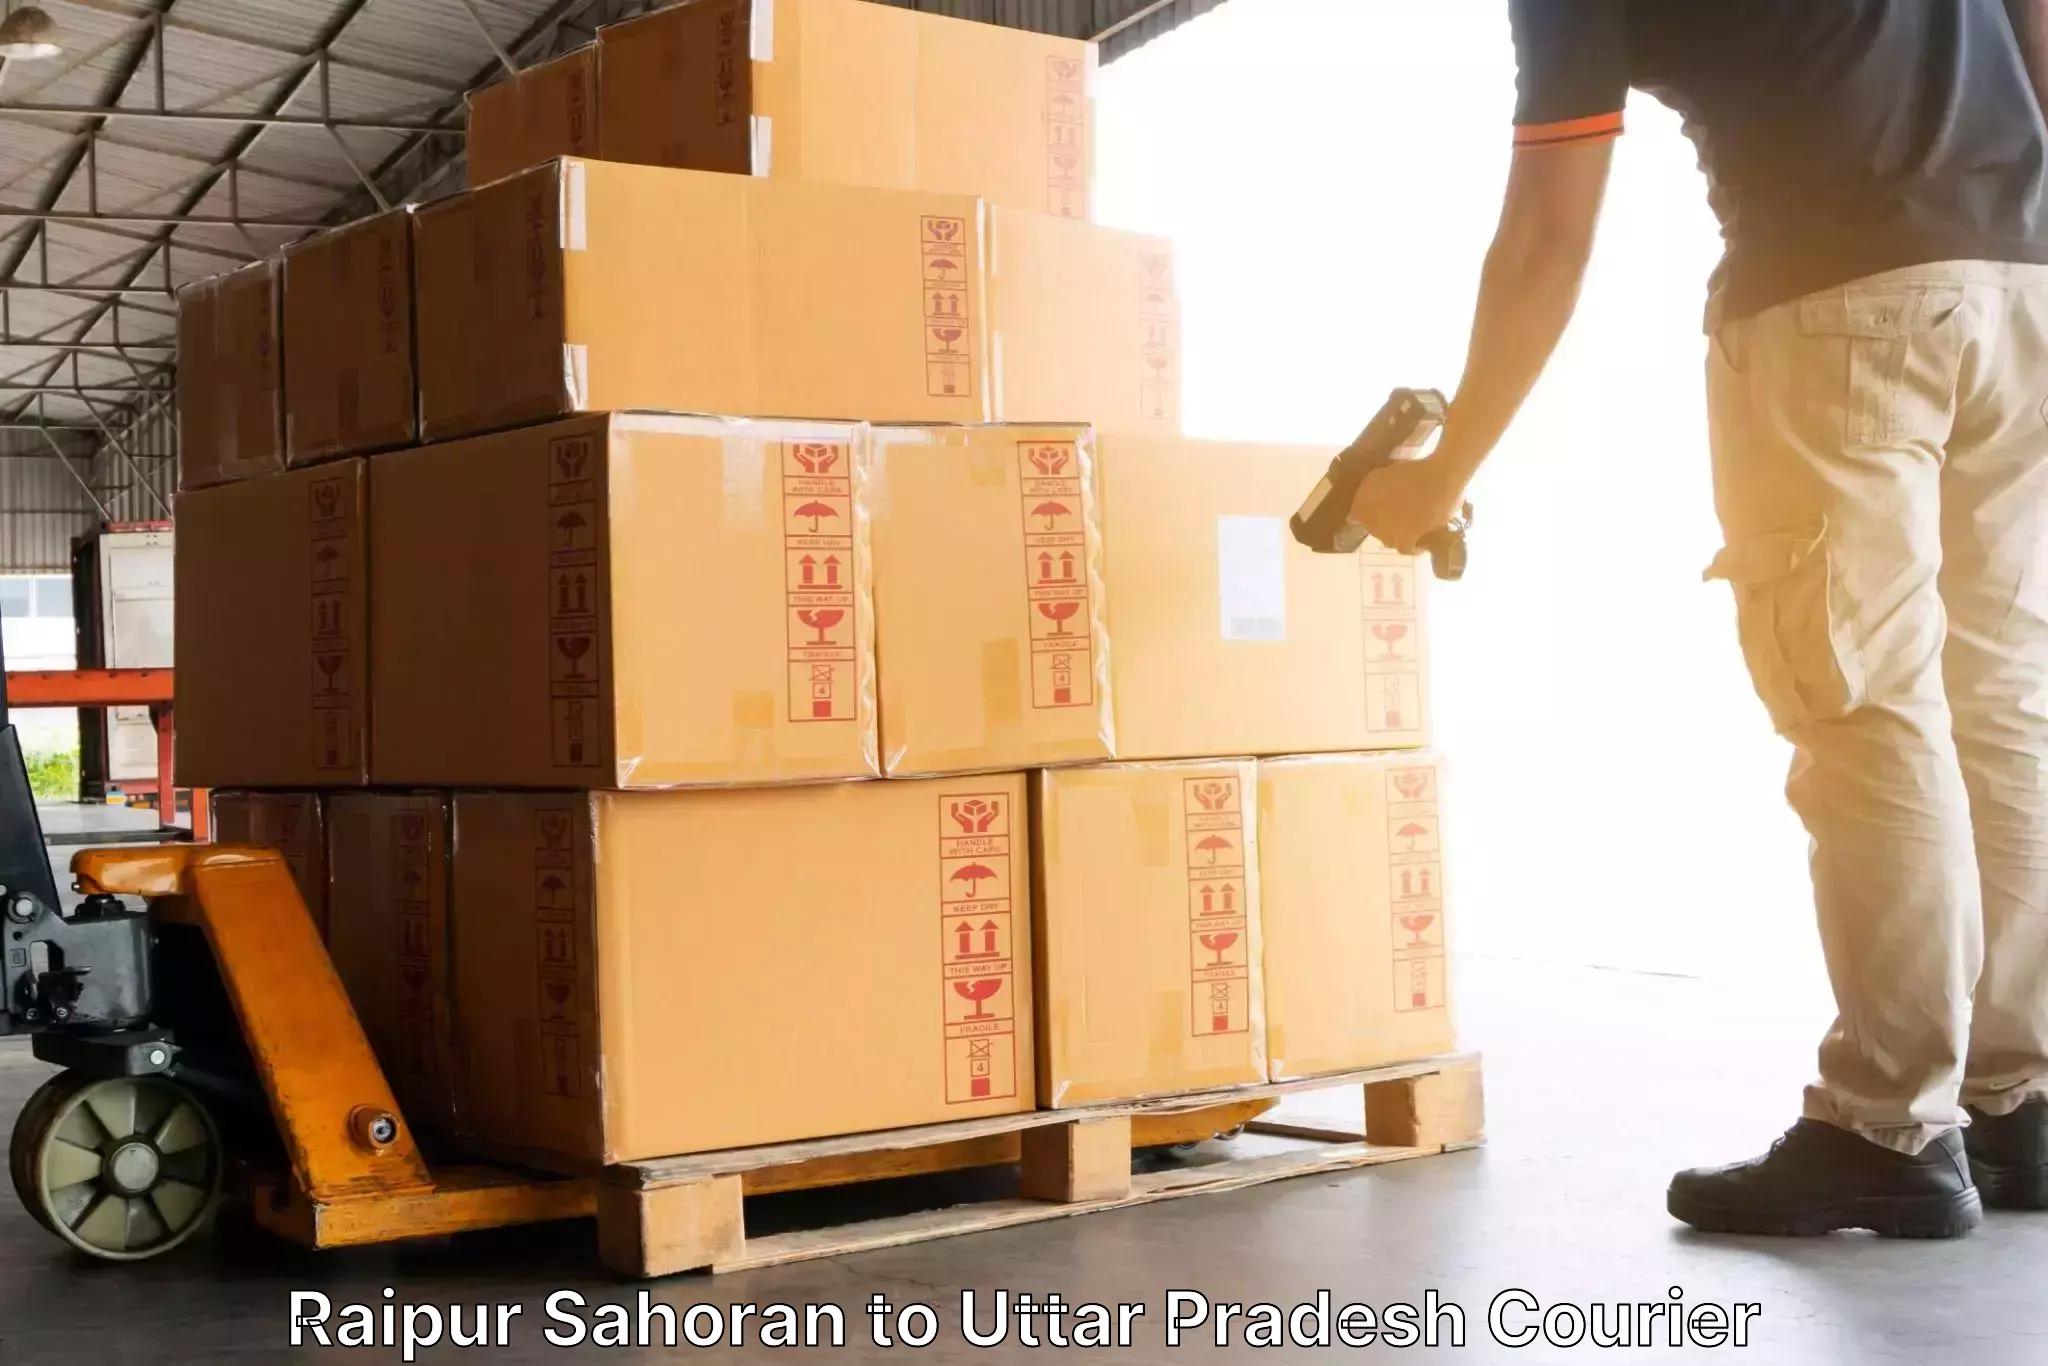 Package tracking Raipur Sahoran to Bakewar